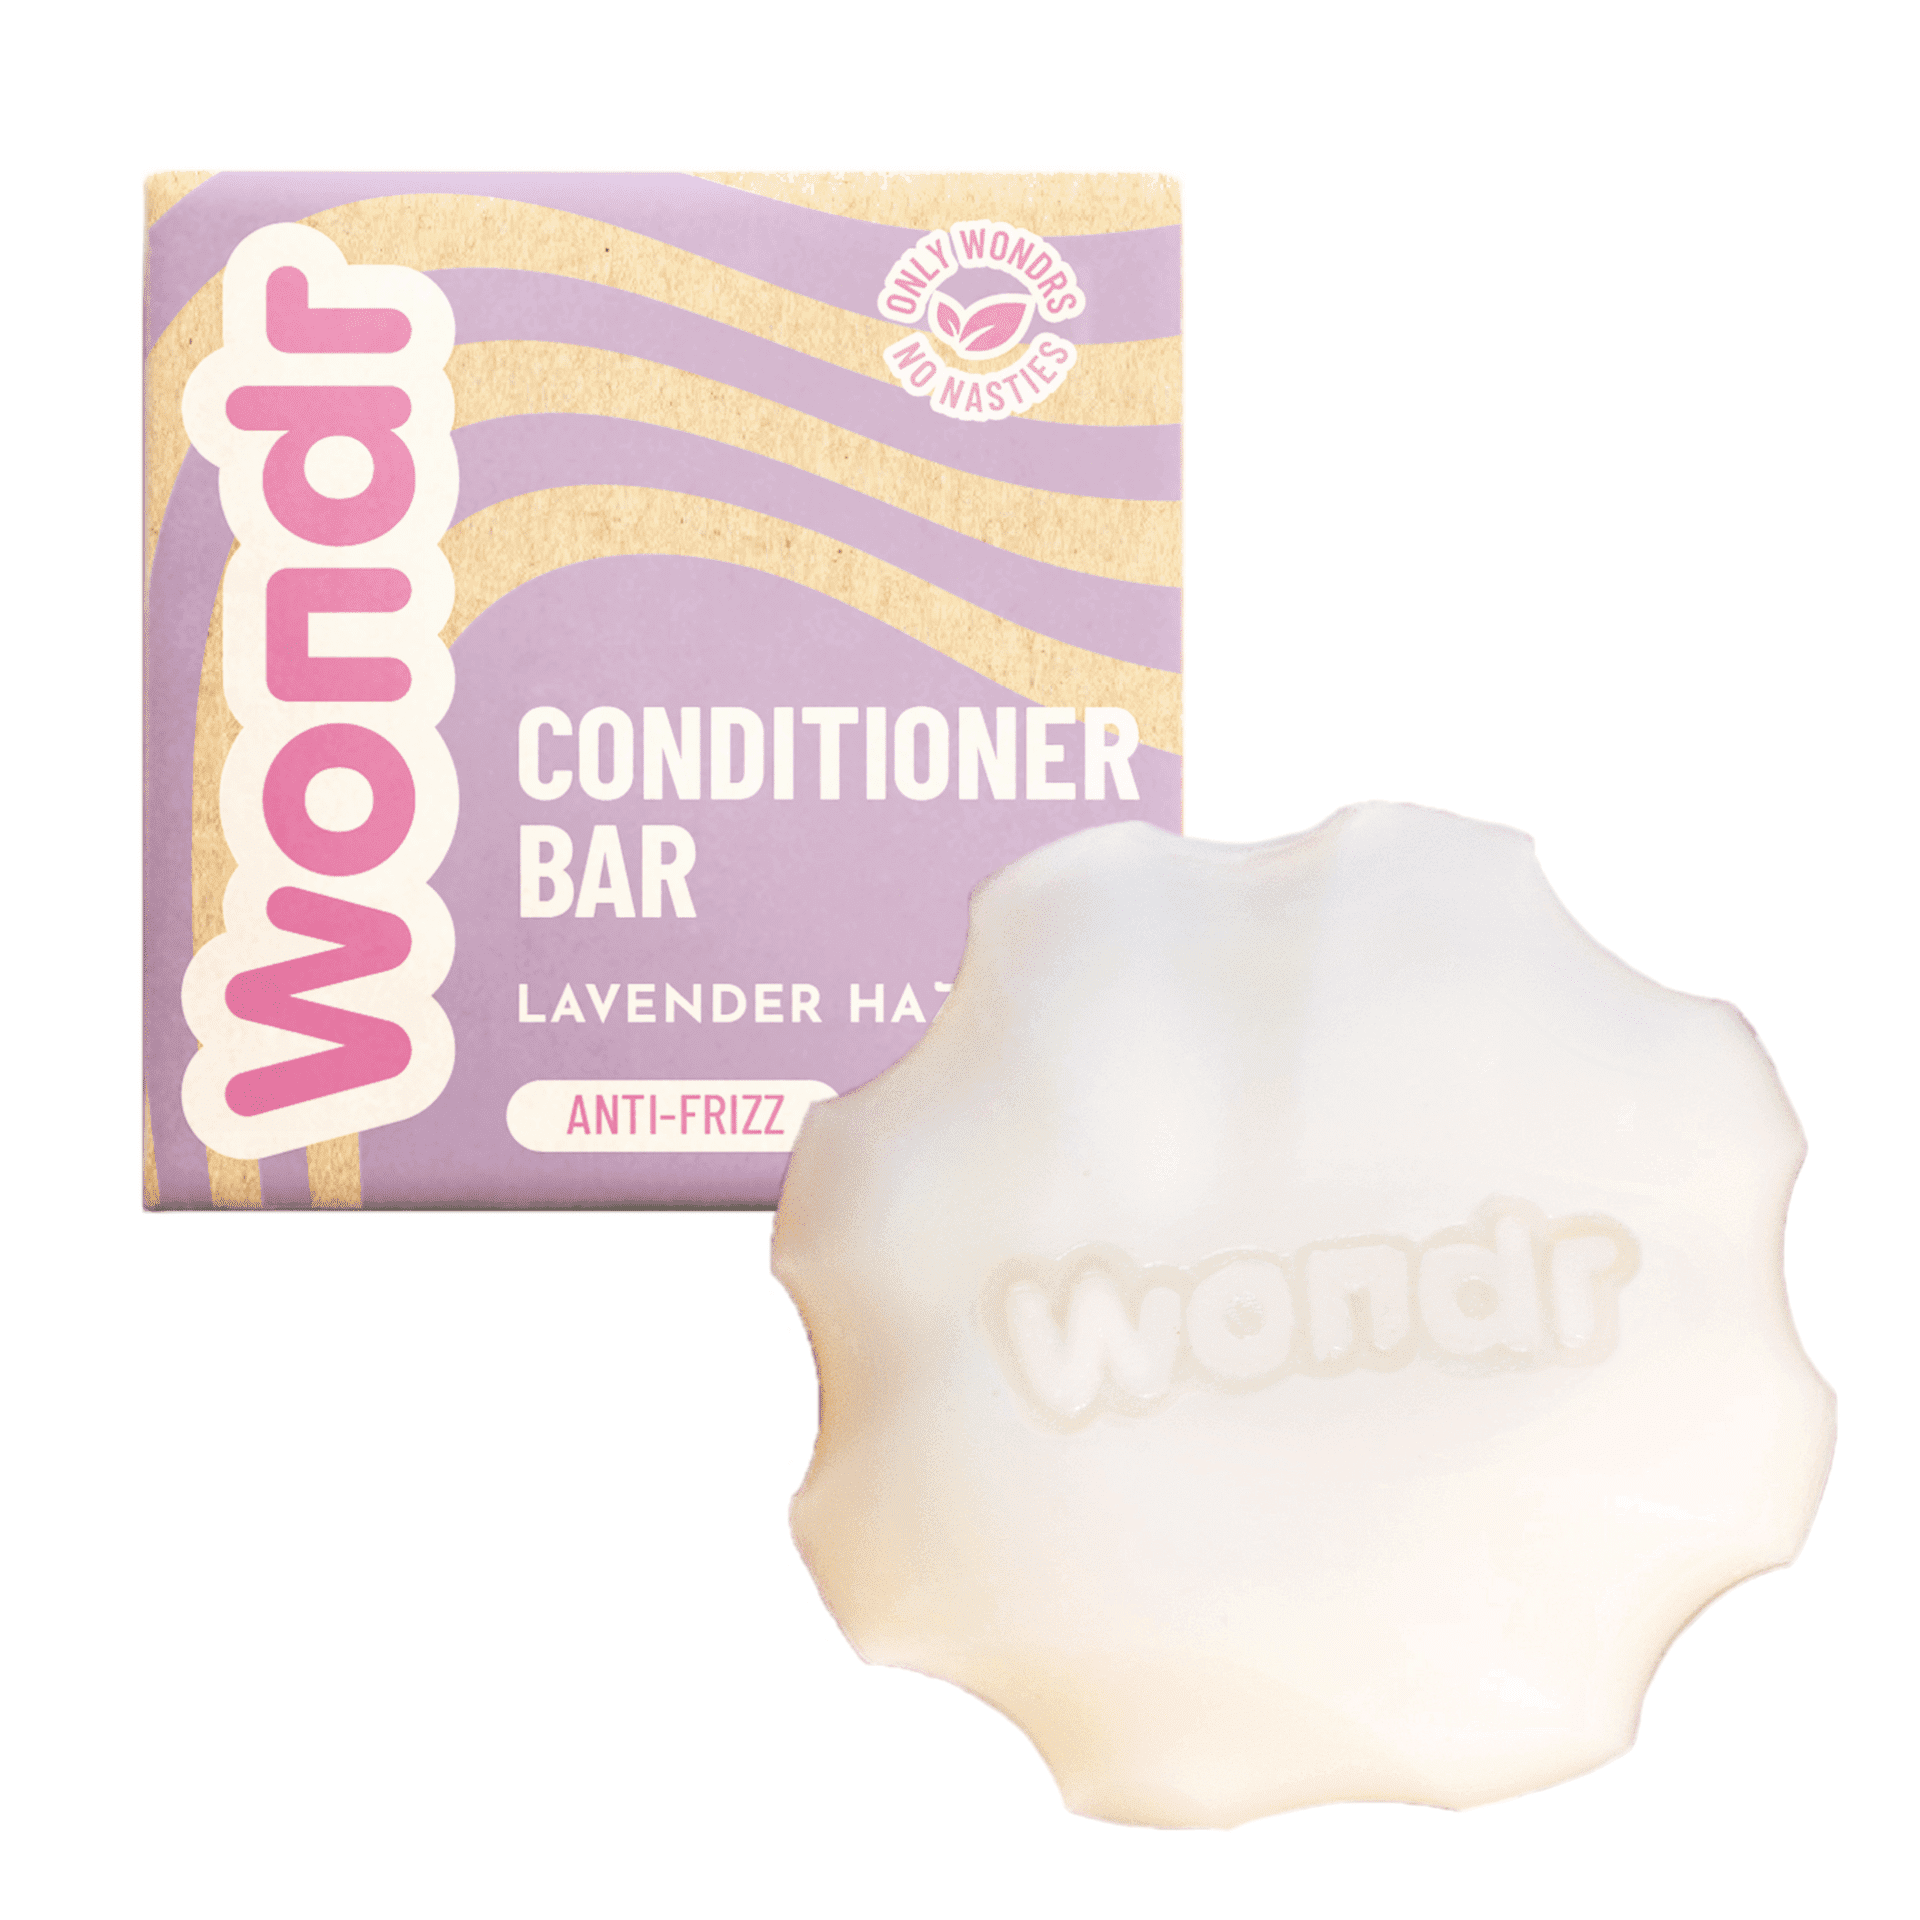 WONDR Conditioner Bar Lavender Haze